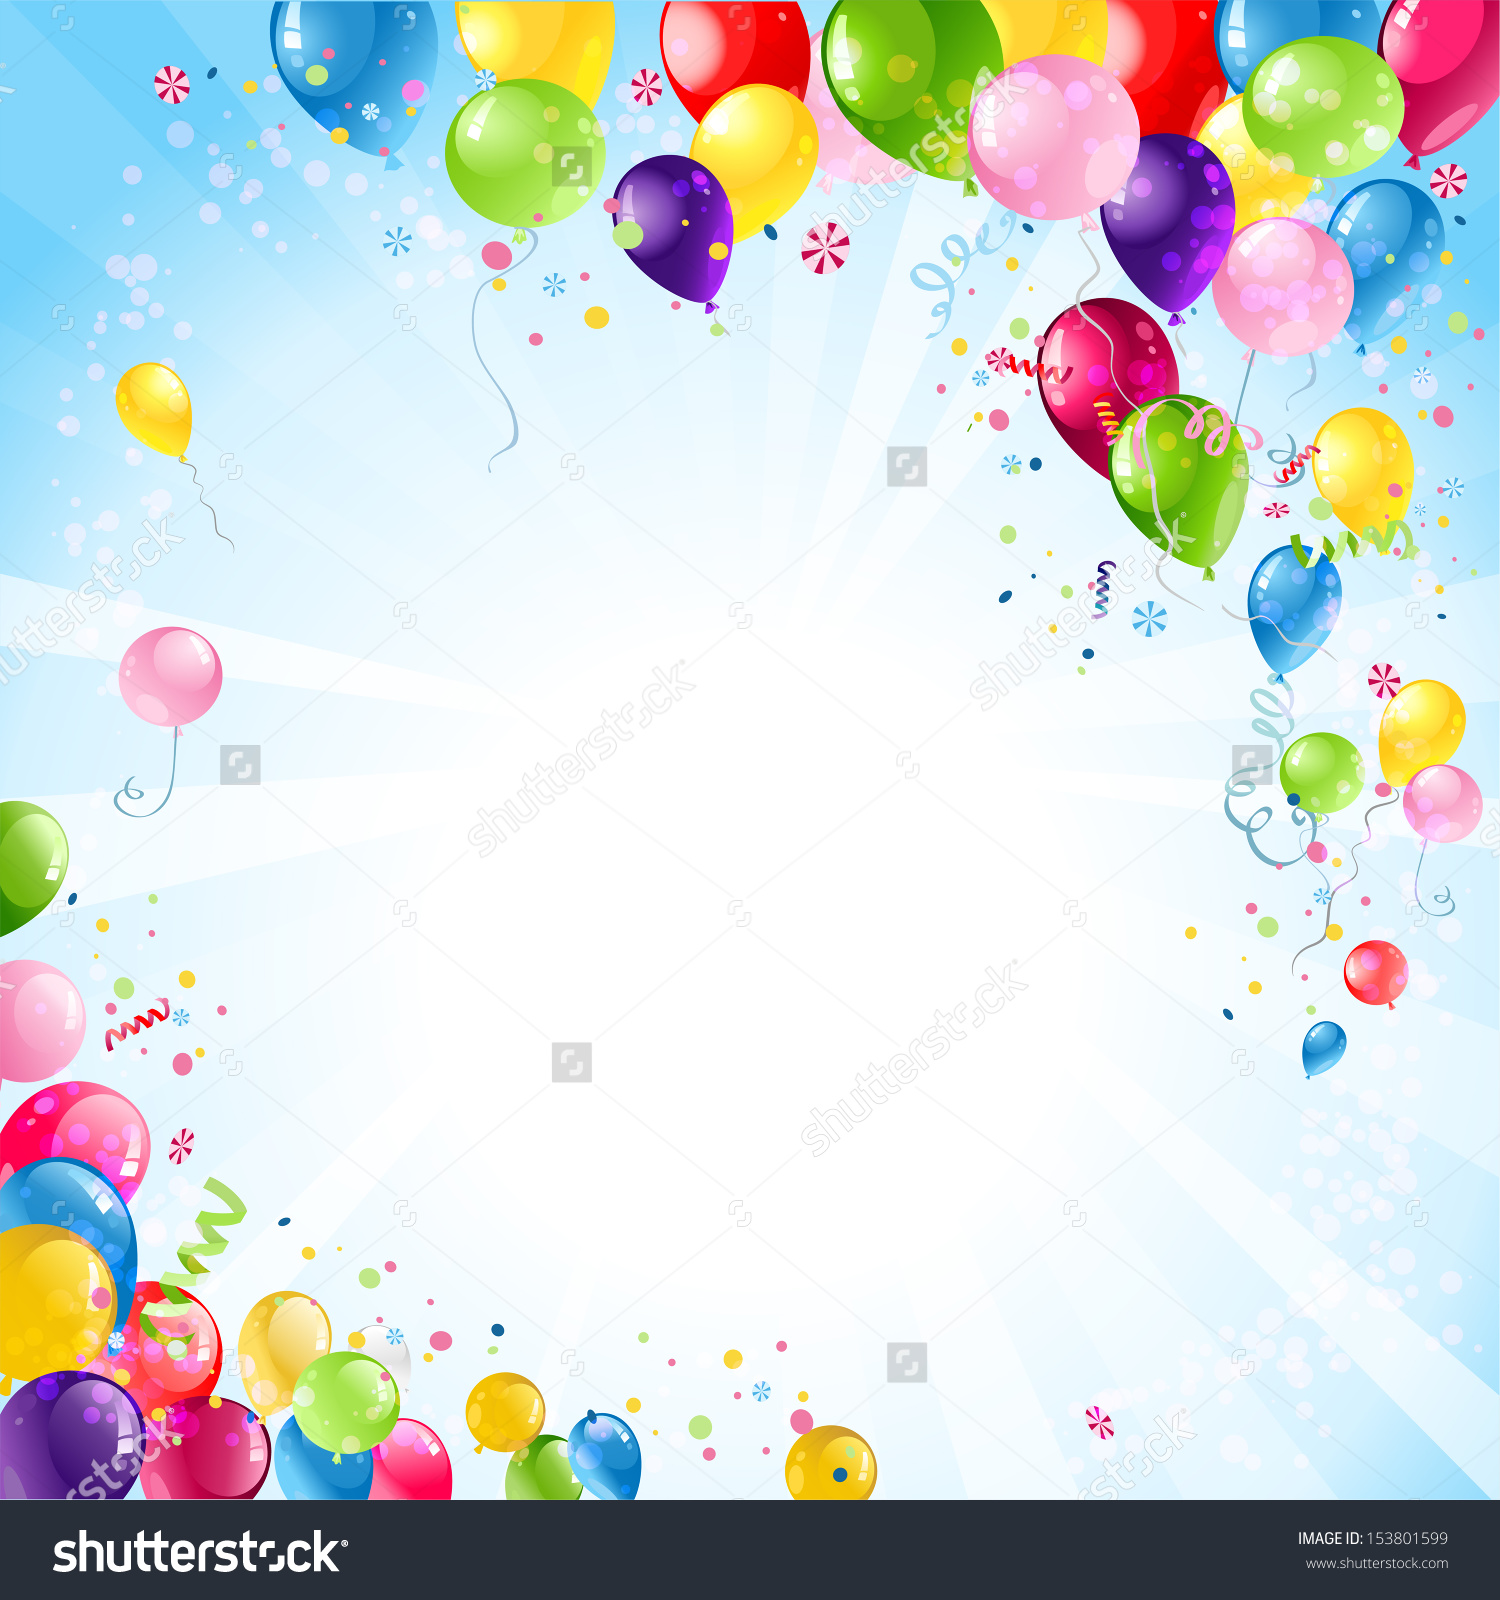 MX-77 Birthday Background, Birthday Adorable Desktop Backgrounds